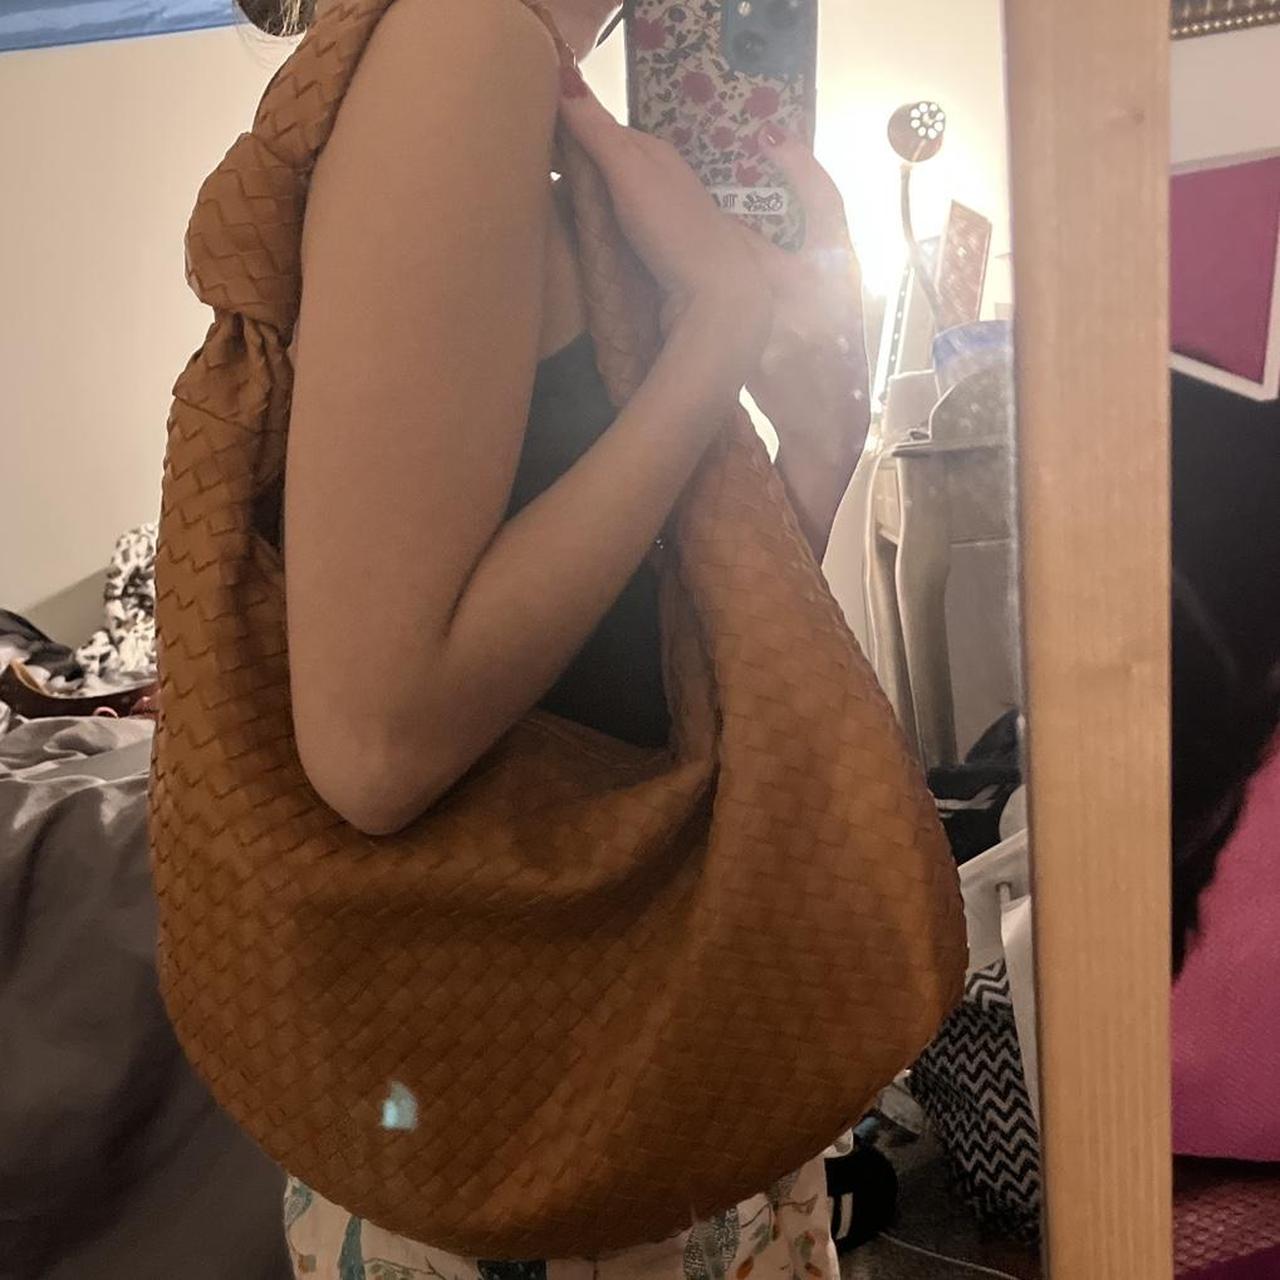 Deux Lux Womens Purse Tote Bucket Bag Adjustable - Depop